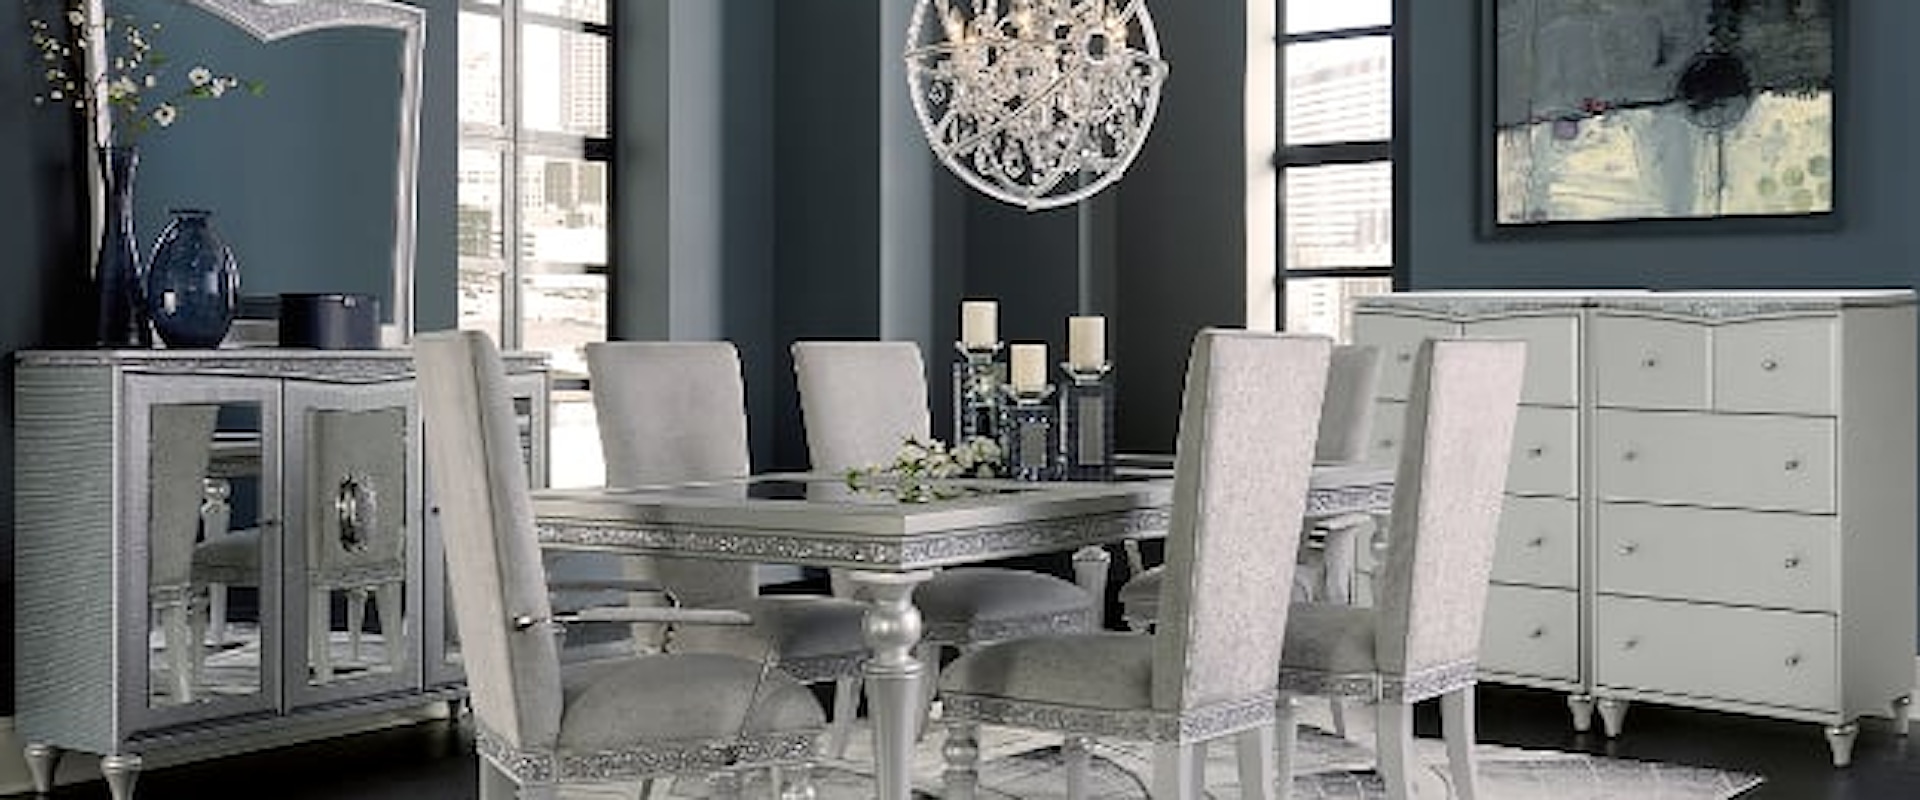 Contemporary Glam 11-Piece Dining Room Set